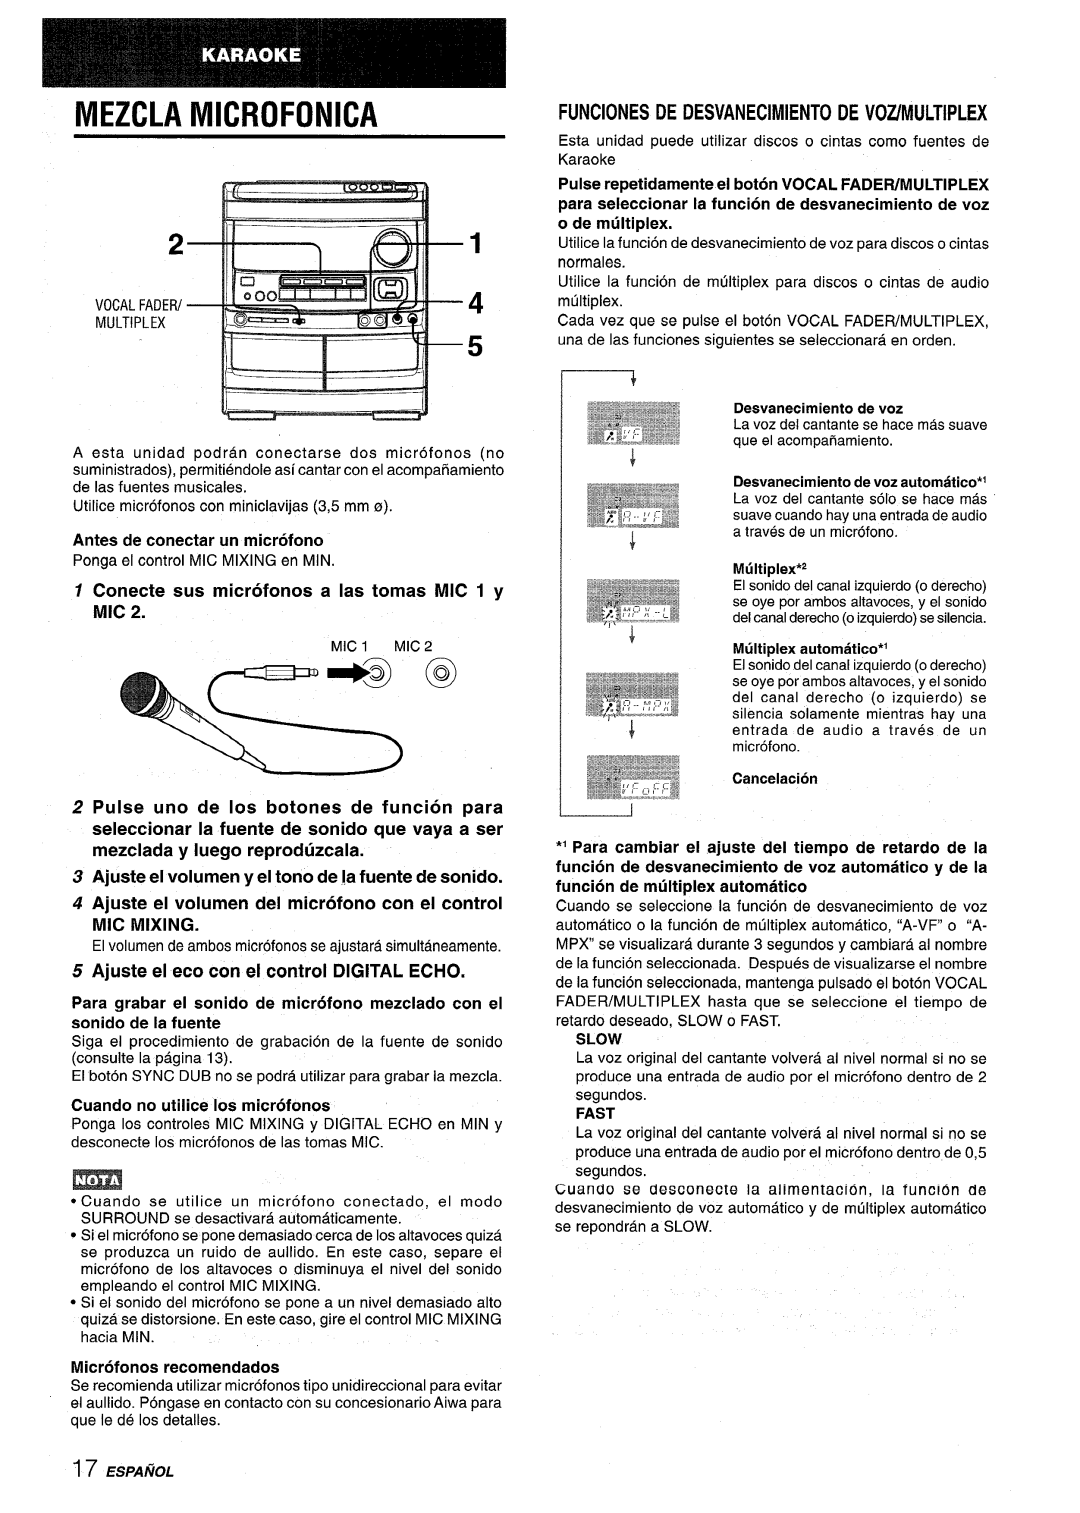 Aiwa NSX-V9000 manual Mezcla Microfonica, FUNClONES DE DESVANECIMIENTODE VOZ/MULTIPLEX, mezclada y Iuego reproduzcala, Slow 